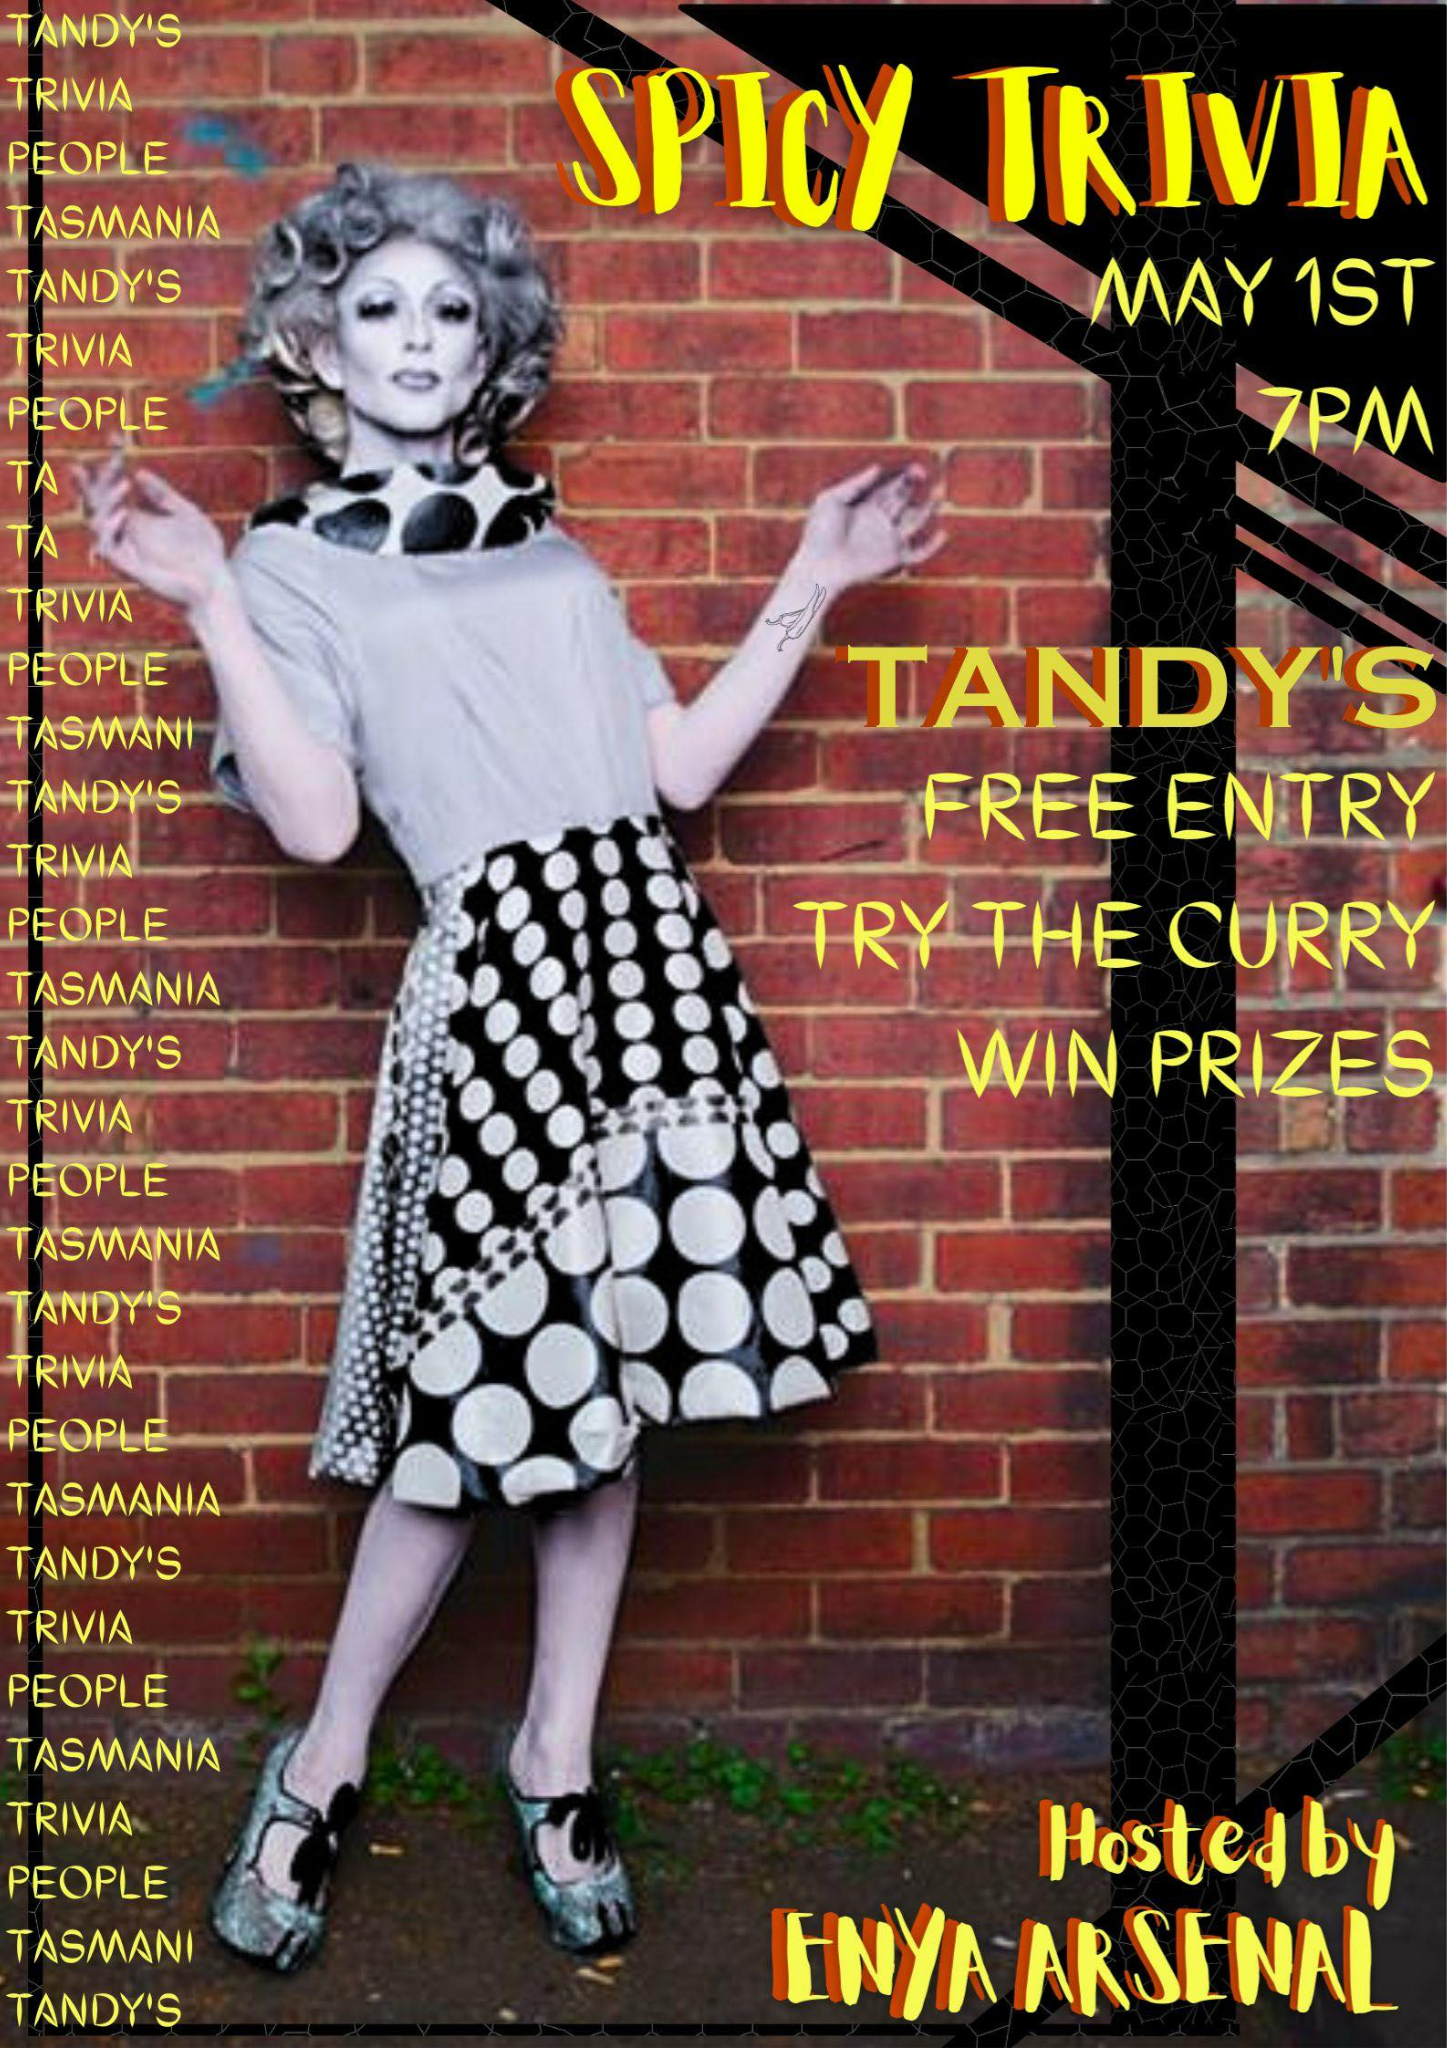 Tandys-Trivia-Poster.png